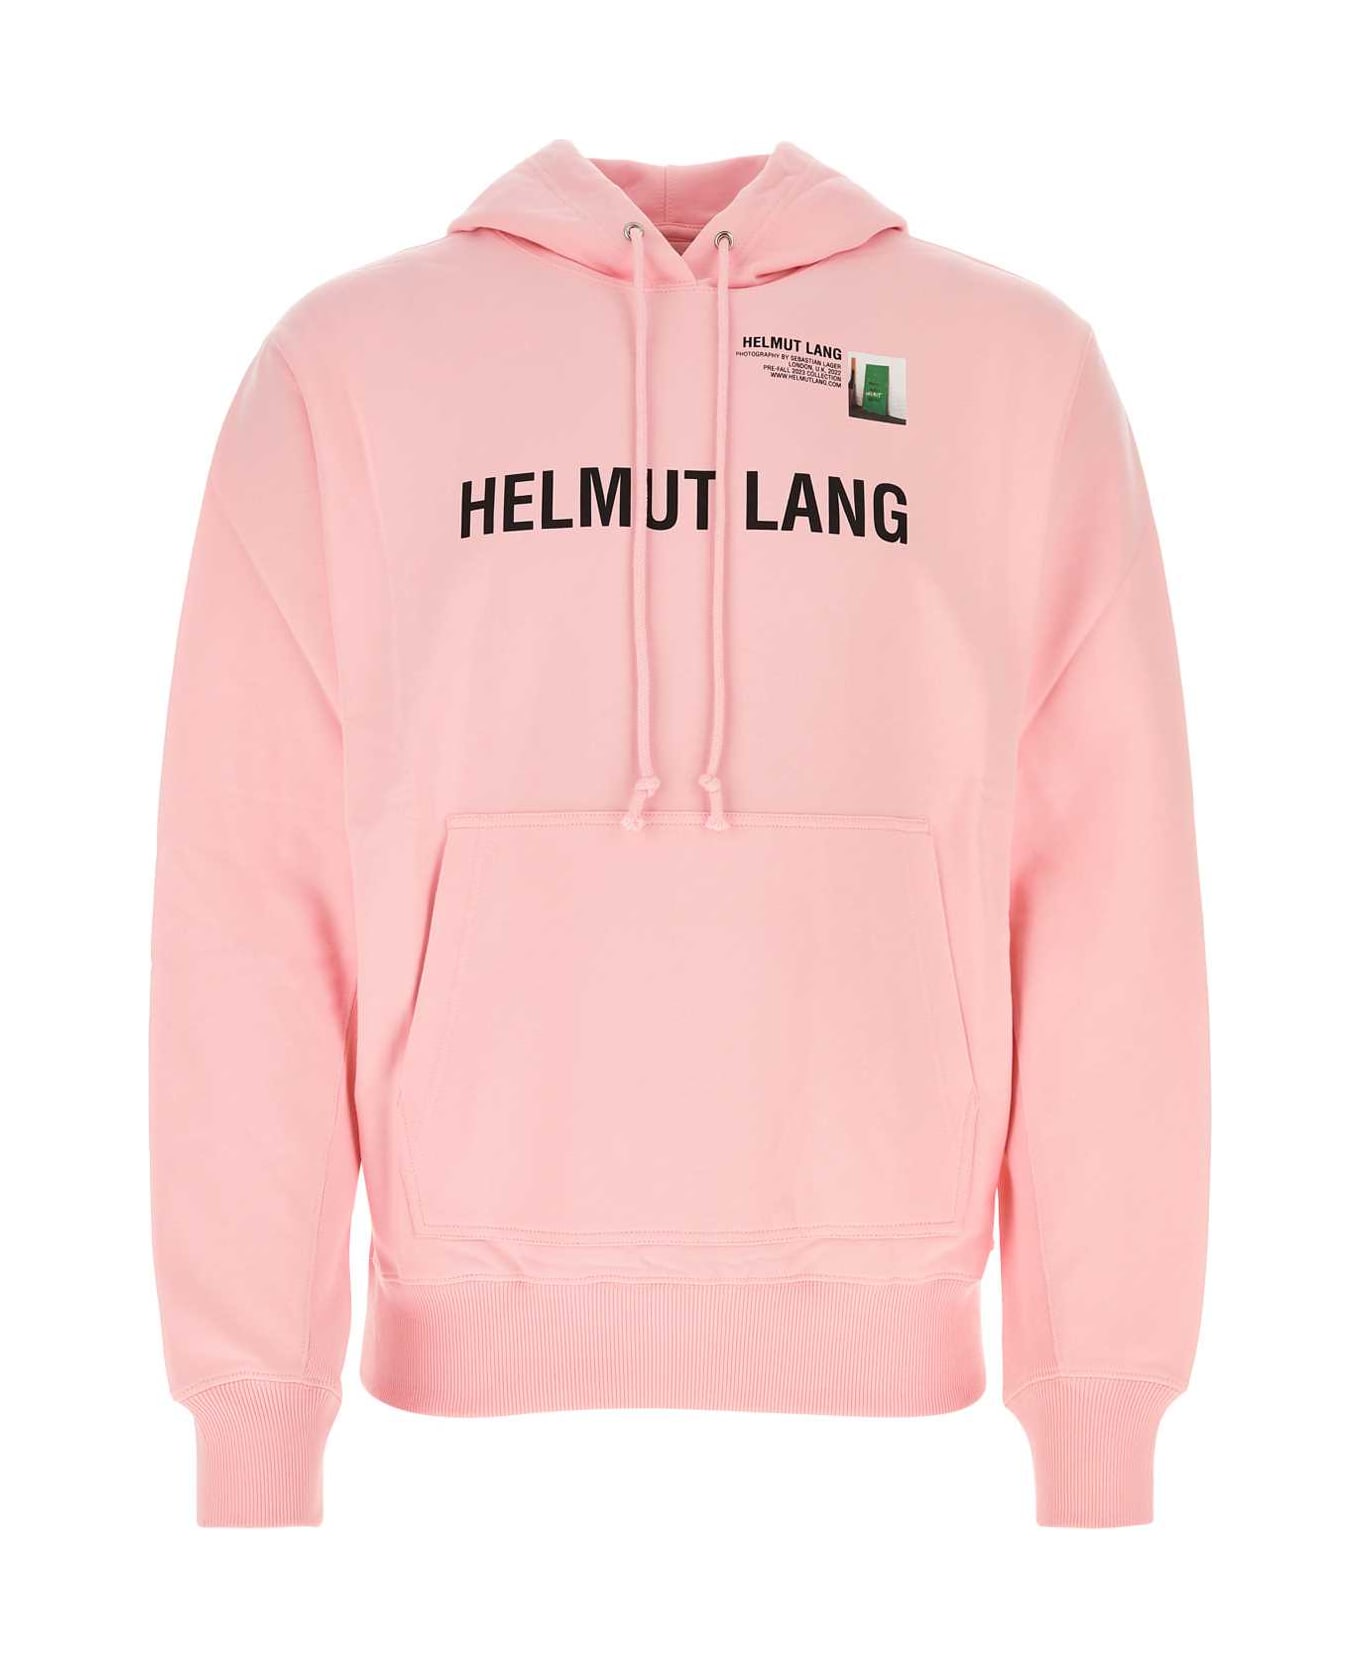 Helmut Lang Pink Cotton Sweatshirt - CAMEOPINK